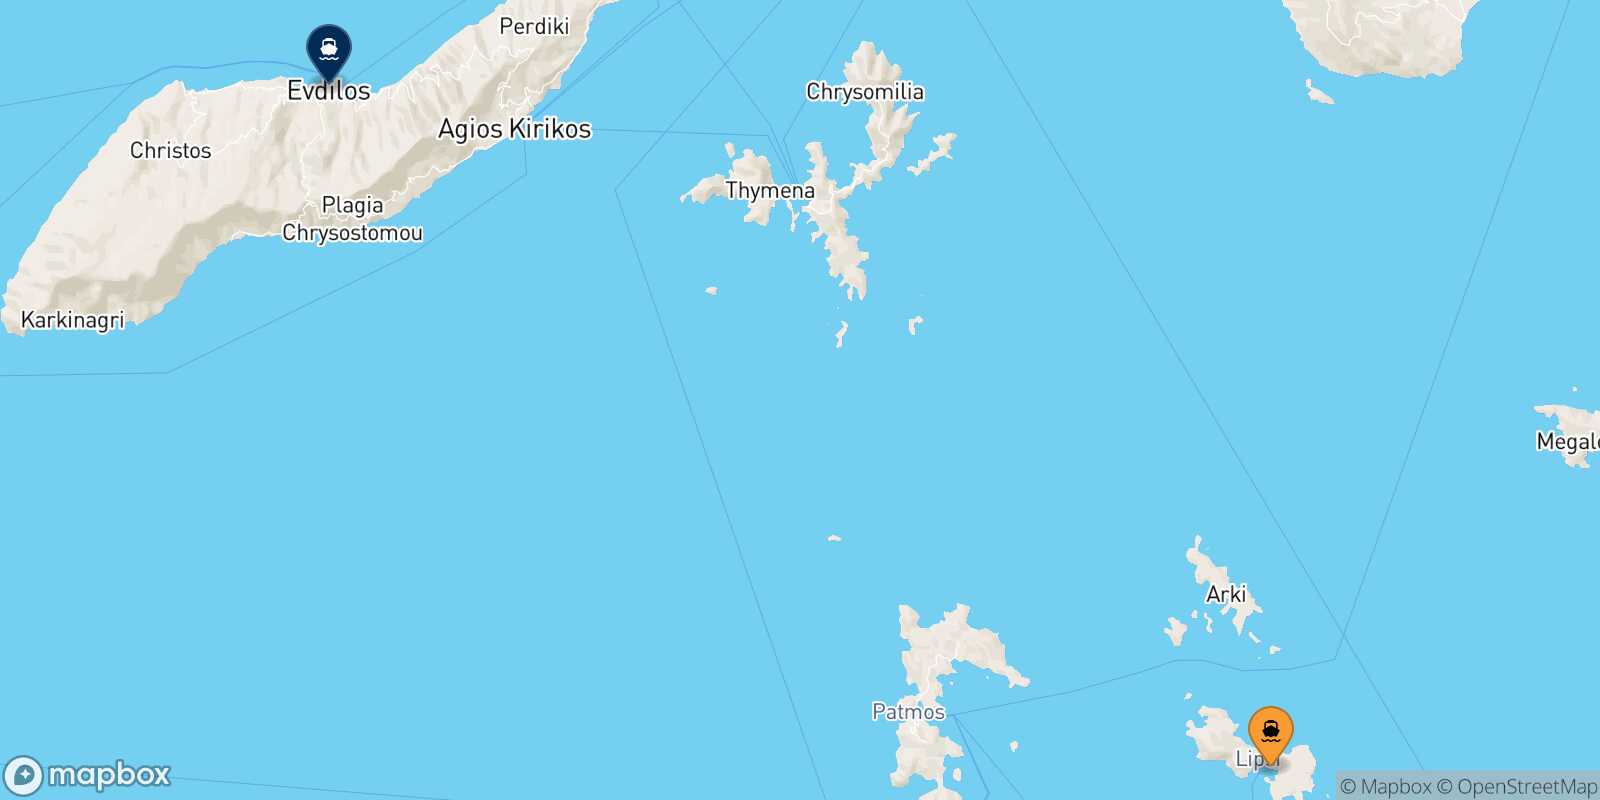 Lipsi Evdilos (Ikaria) route map